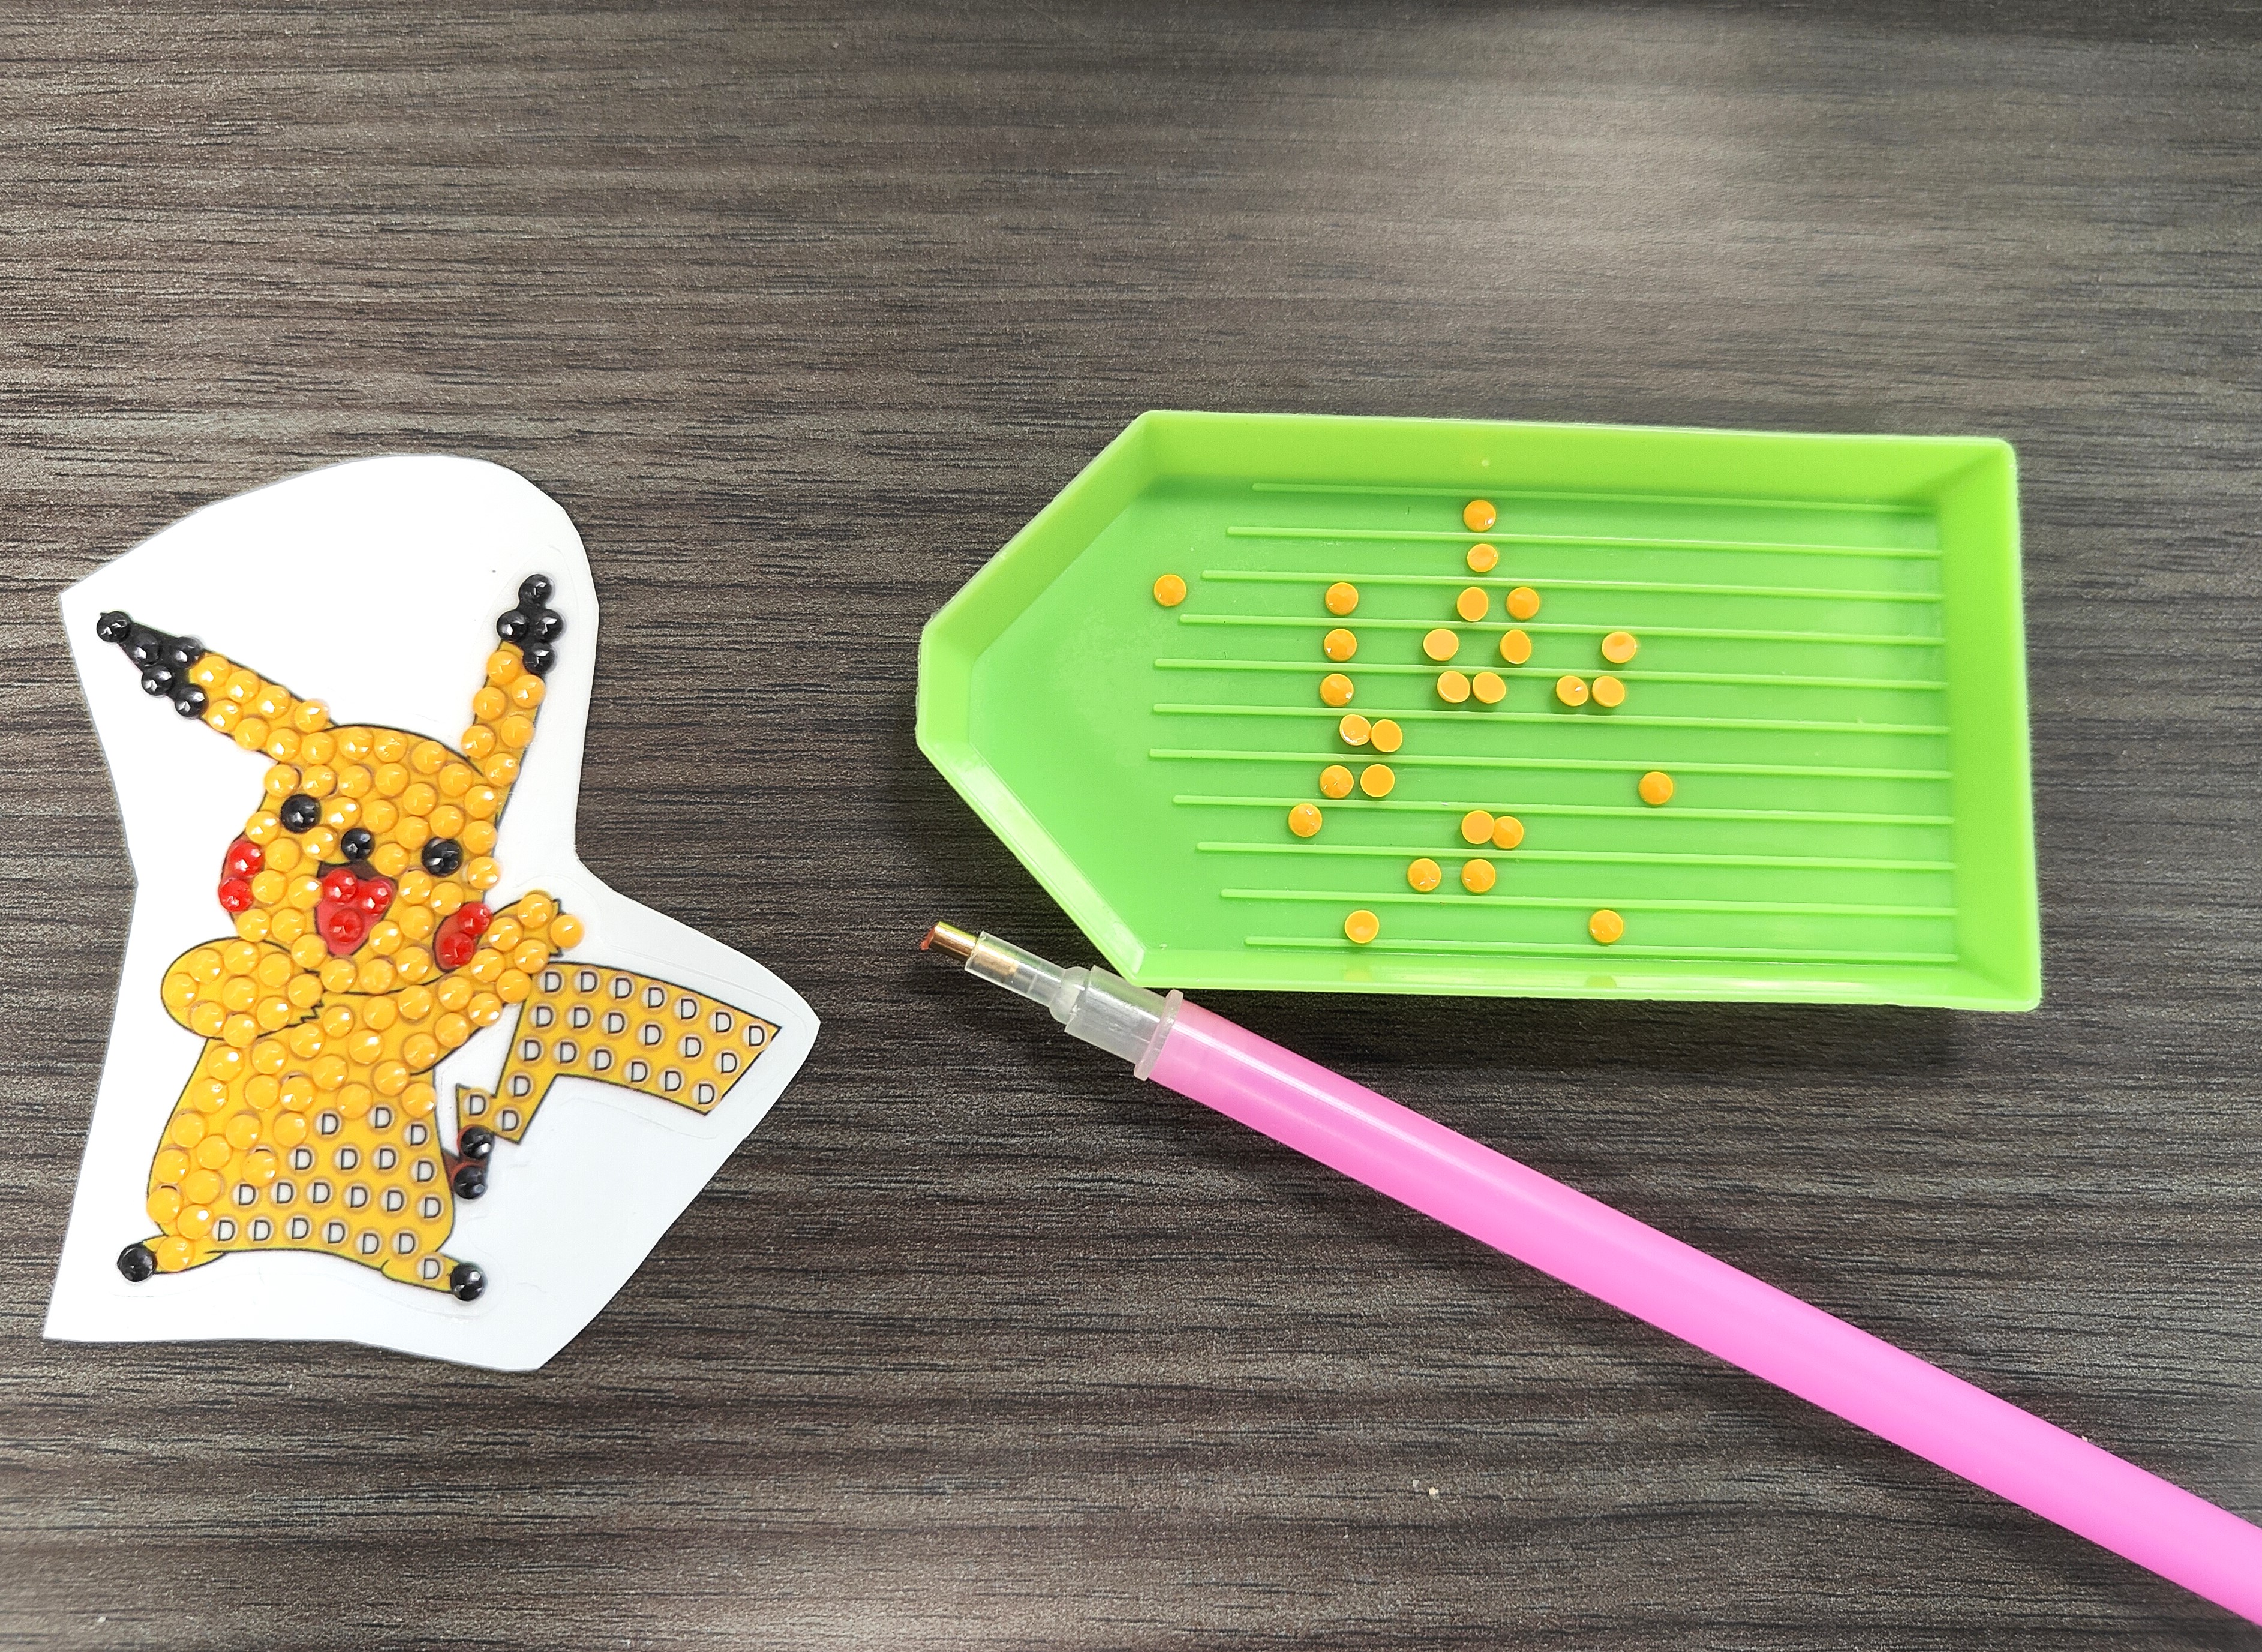 Pikachu diamond art sticker with pink stylus and green bead tray